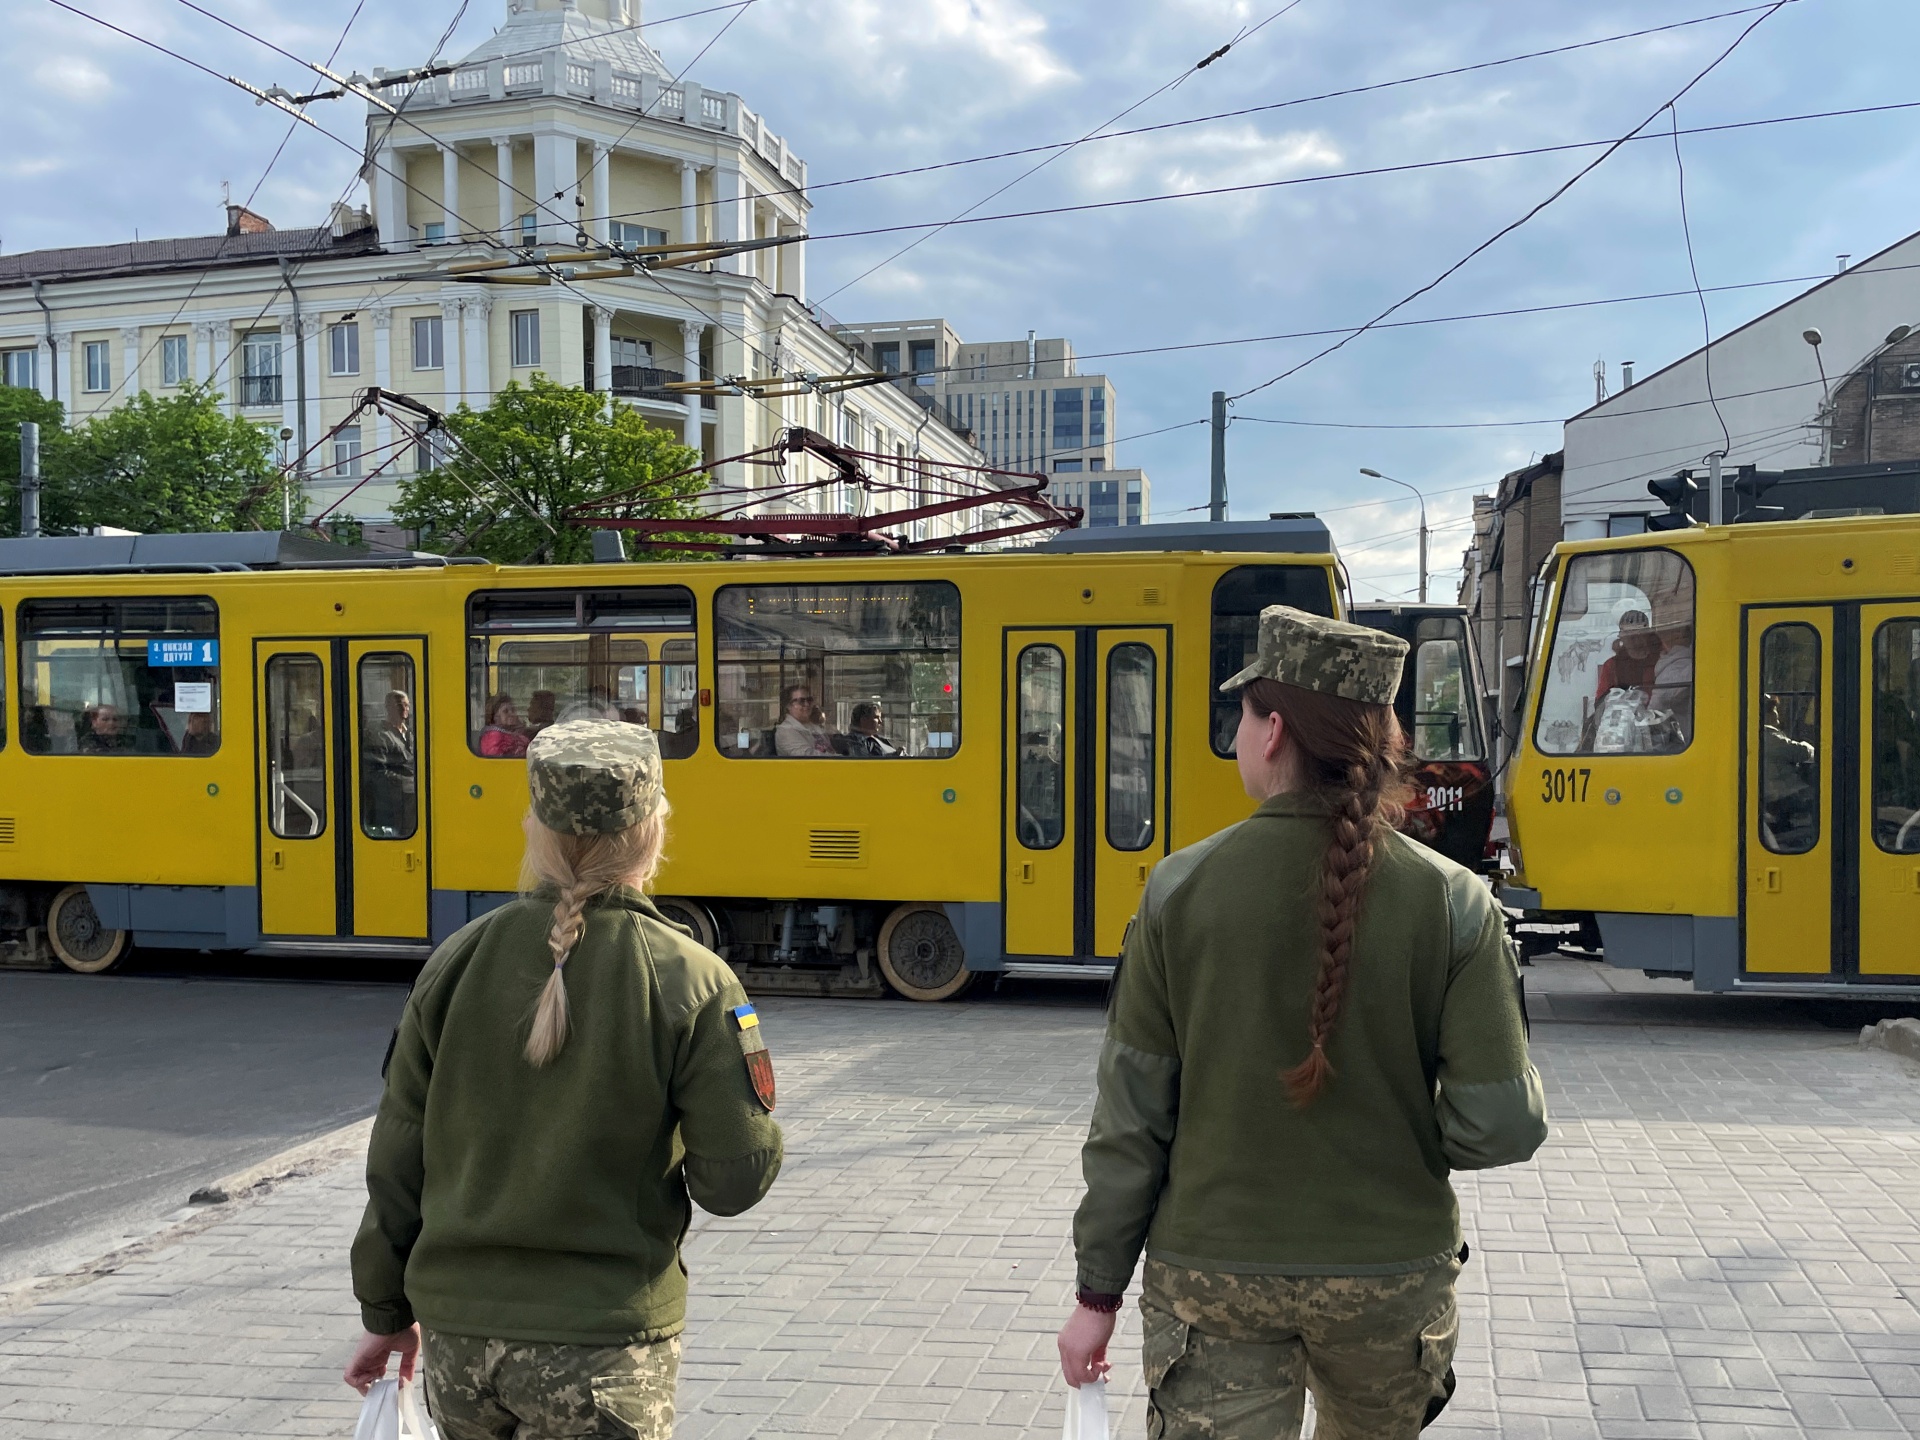 Ukrainian women joining the military amid Russia’s invasion | Russia-Ukraine war News